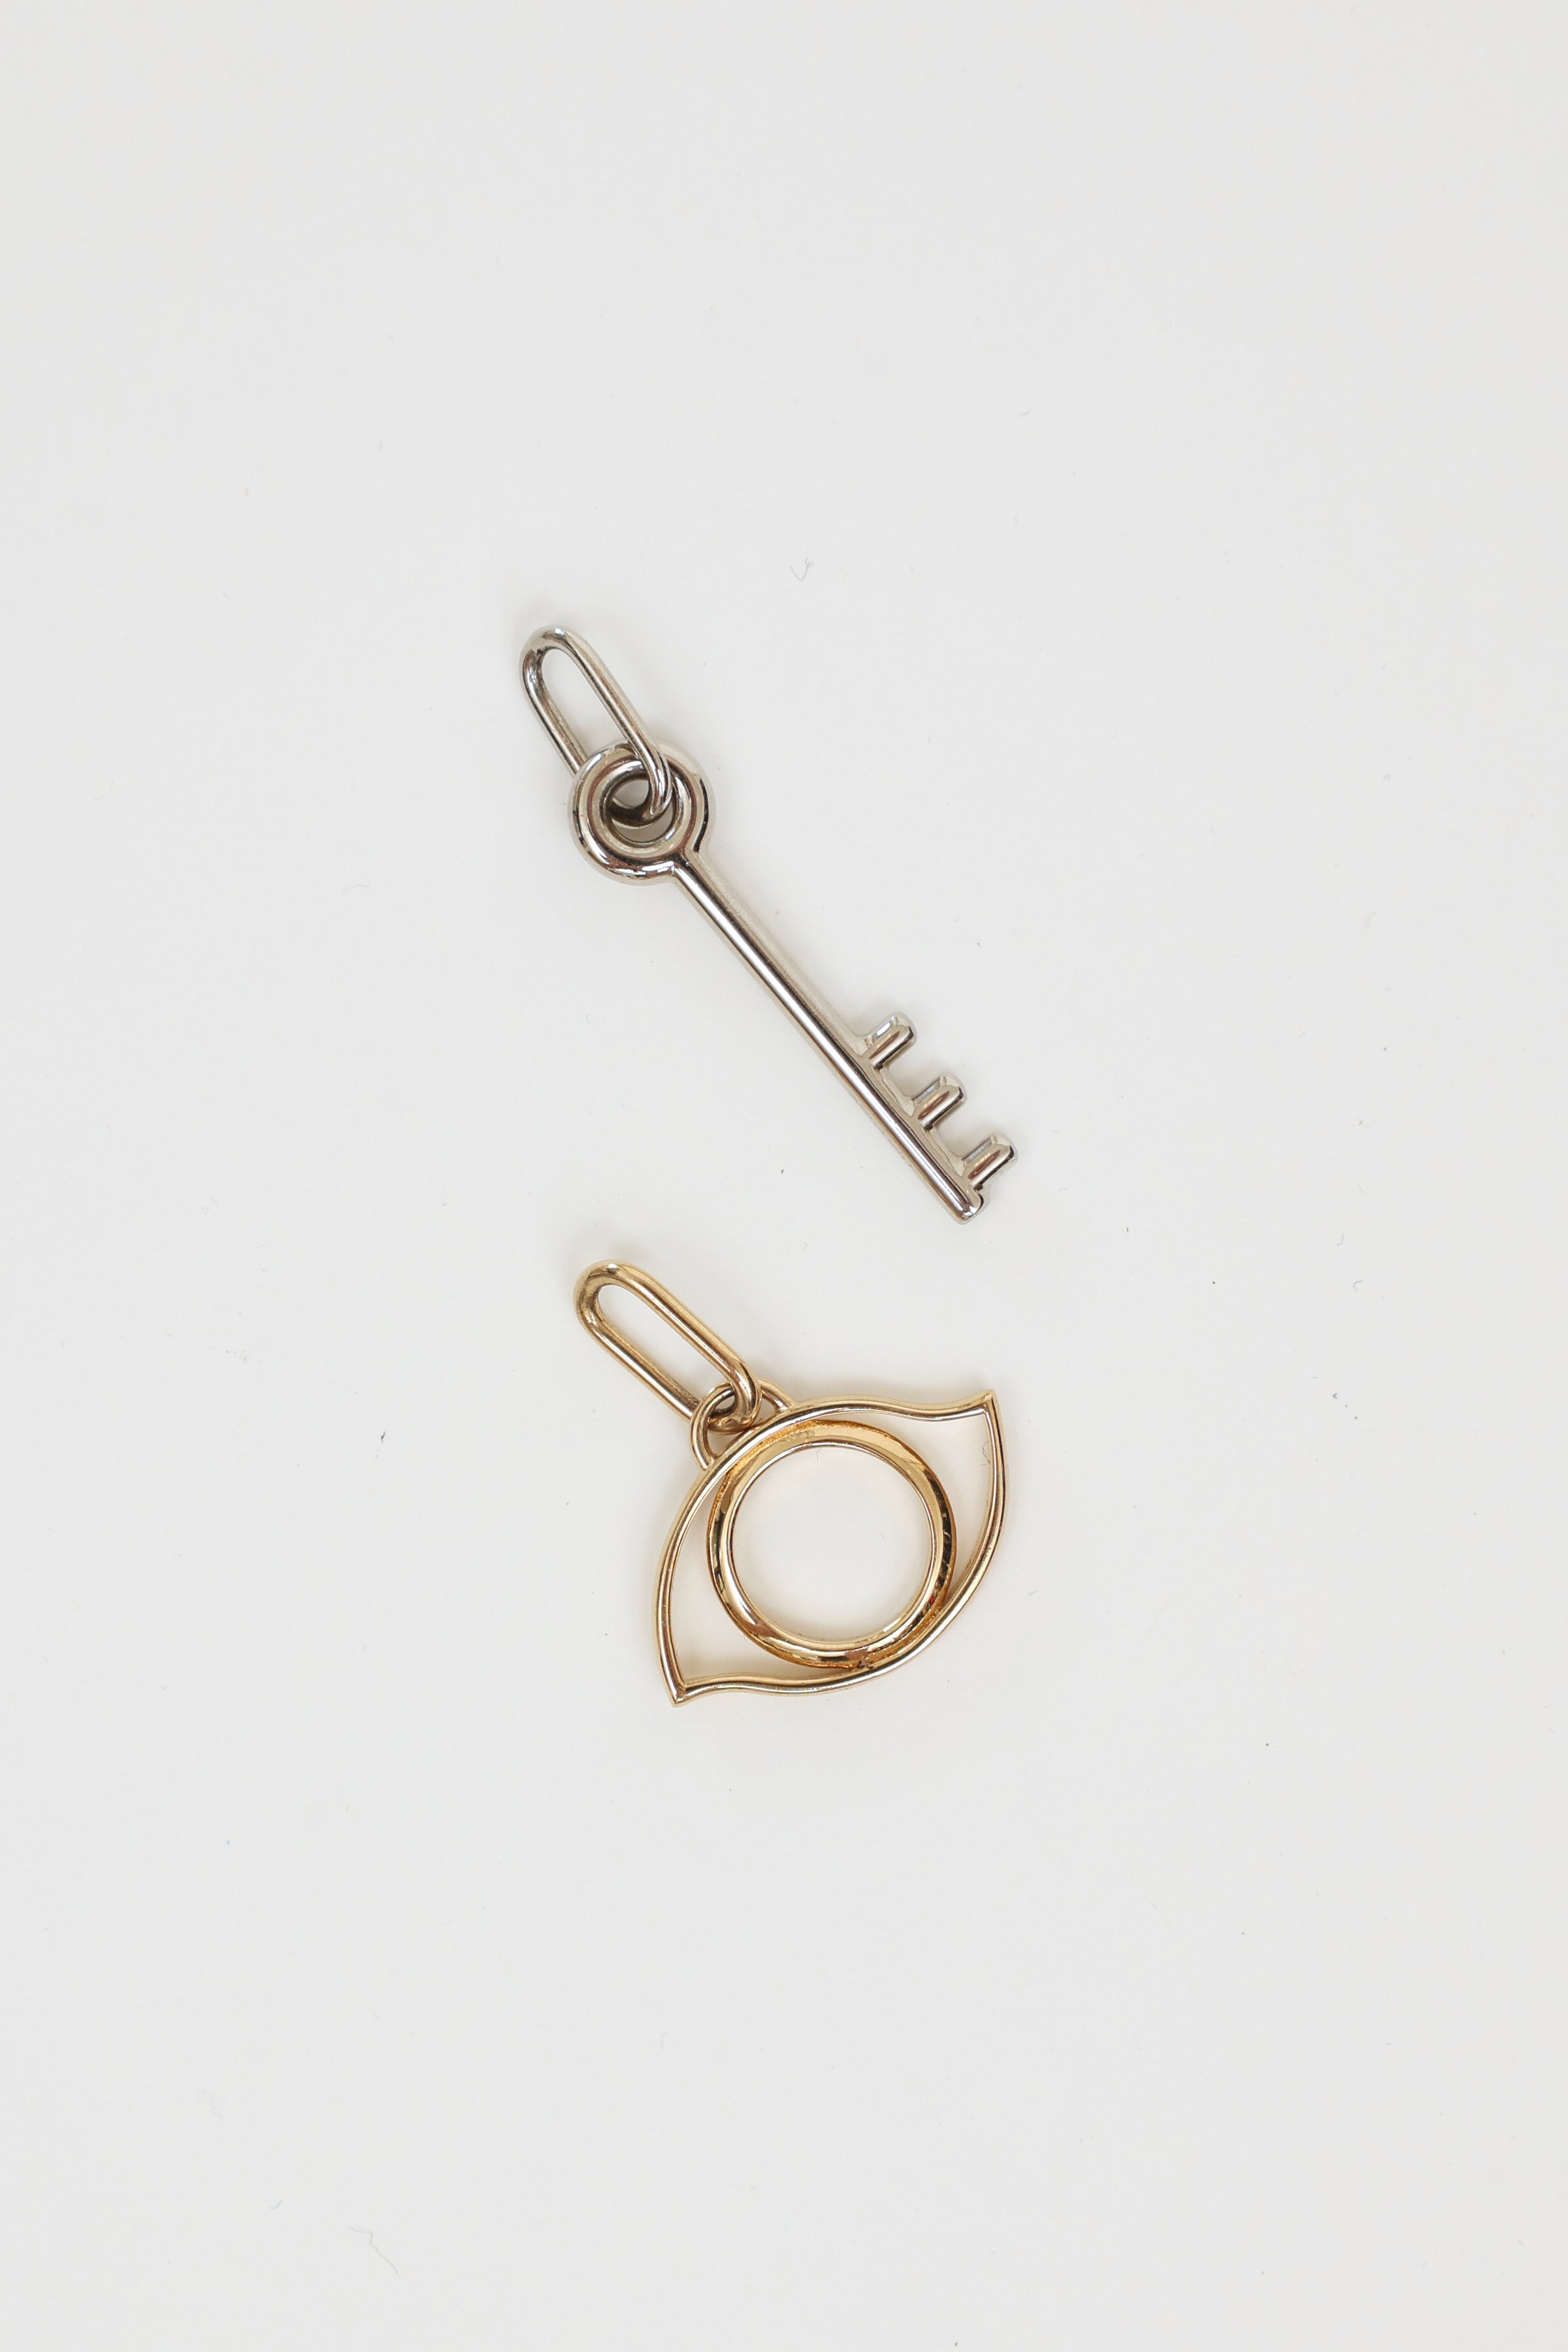 Hermes Gold Swift Leather/Palladium Pendant CURIOSITE Necklace Bnib! - poupishop